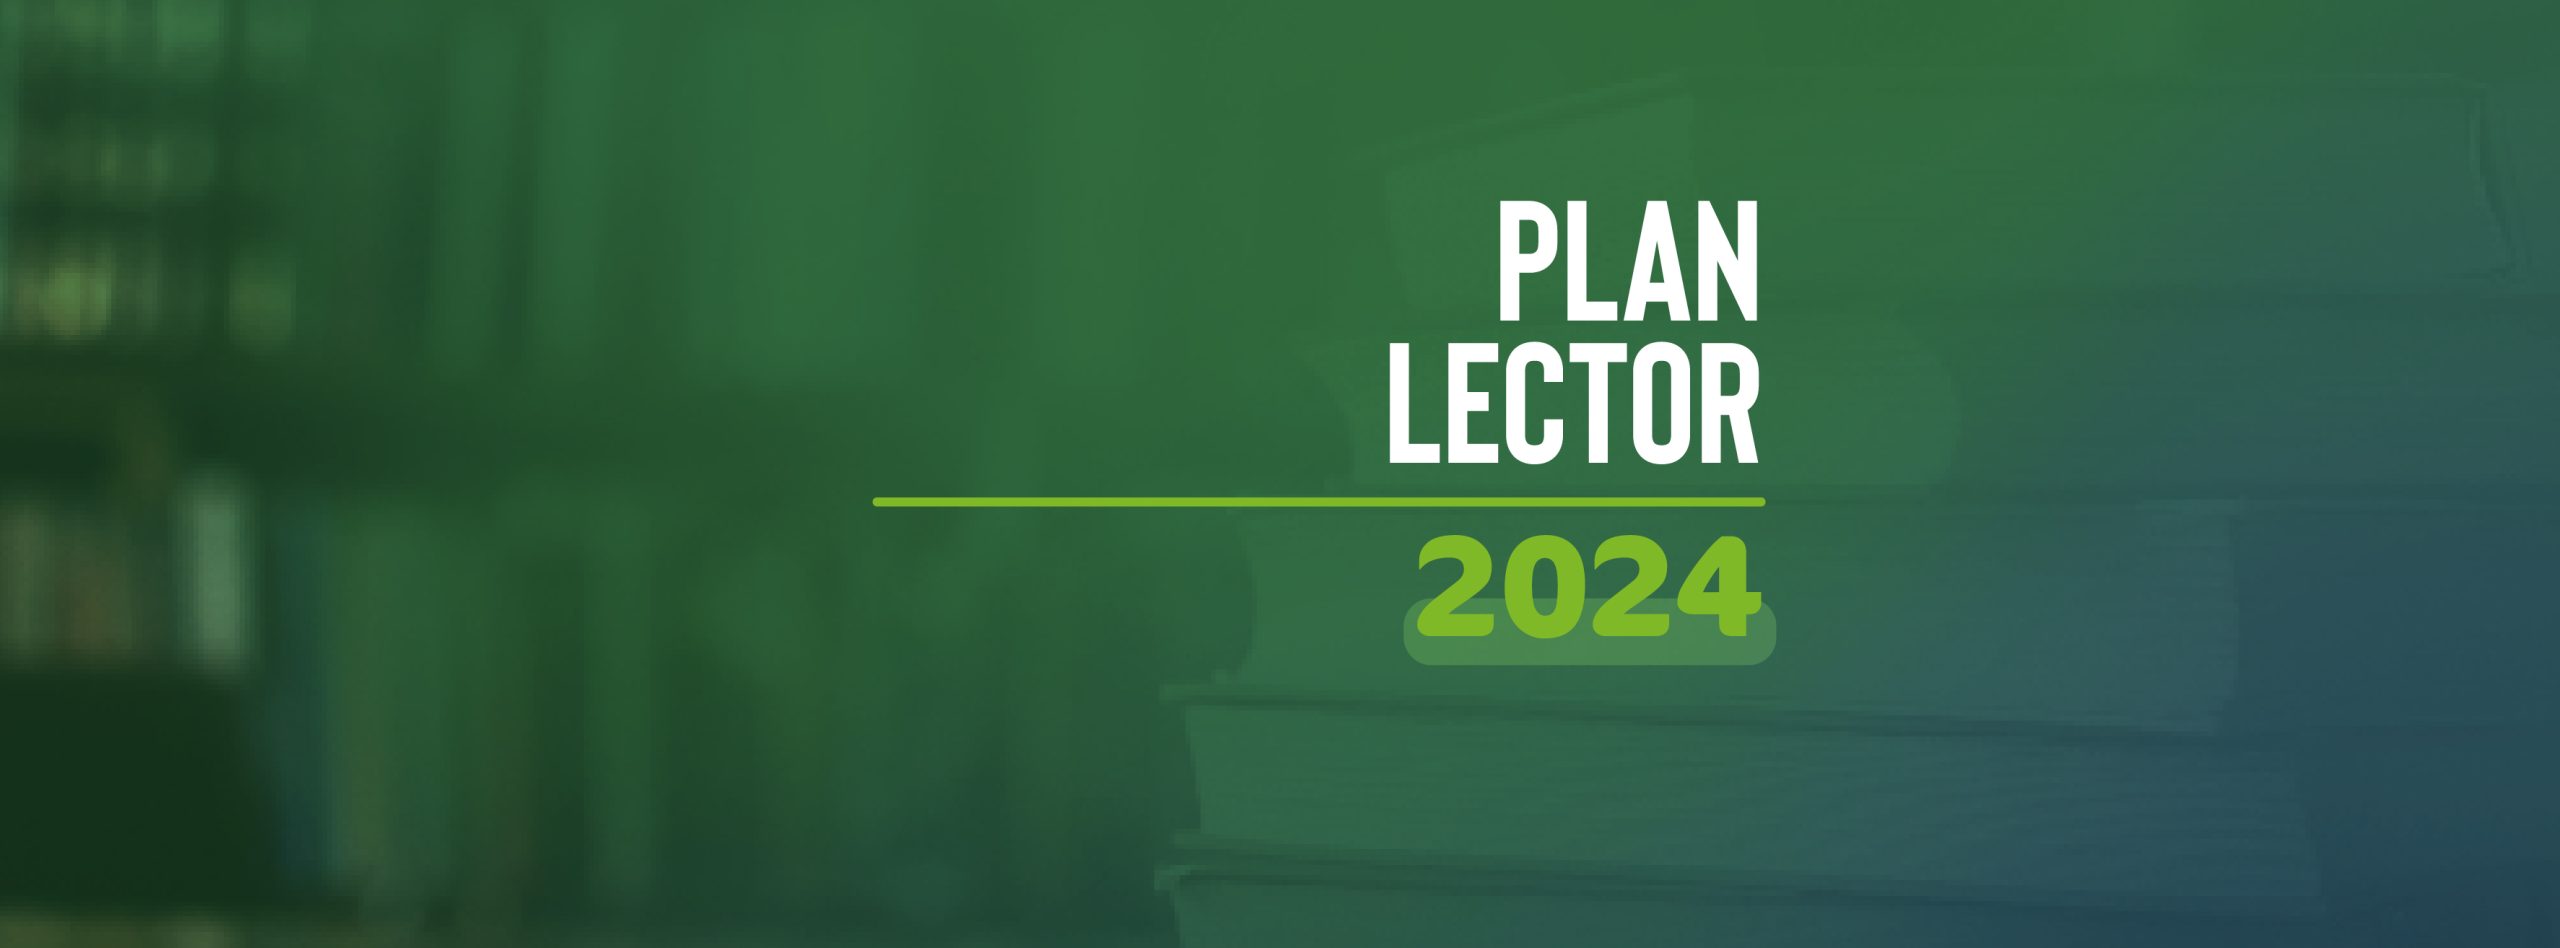 Plan lector 2024